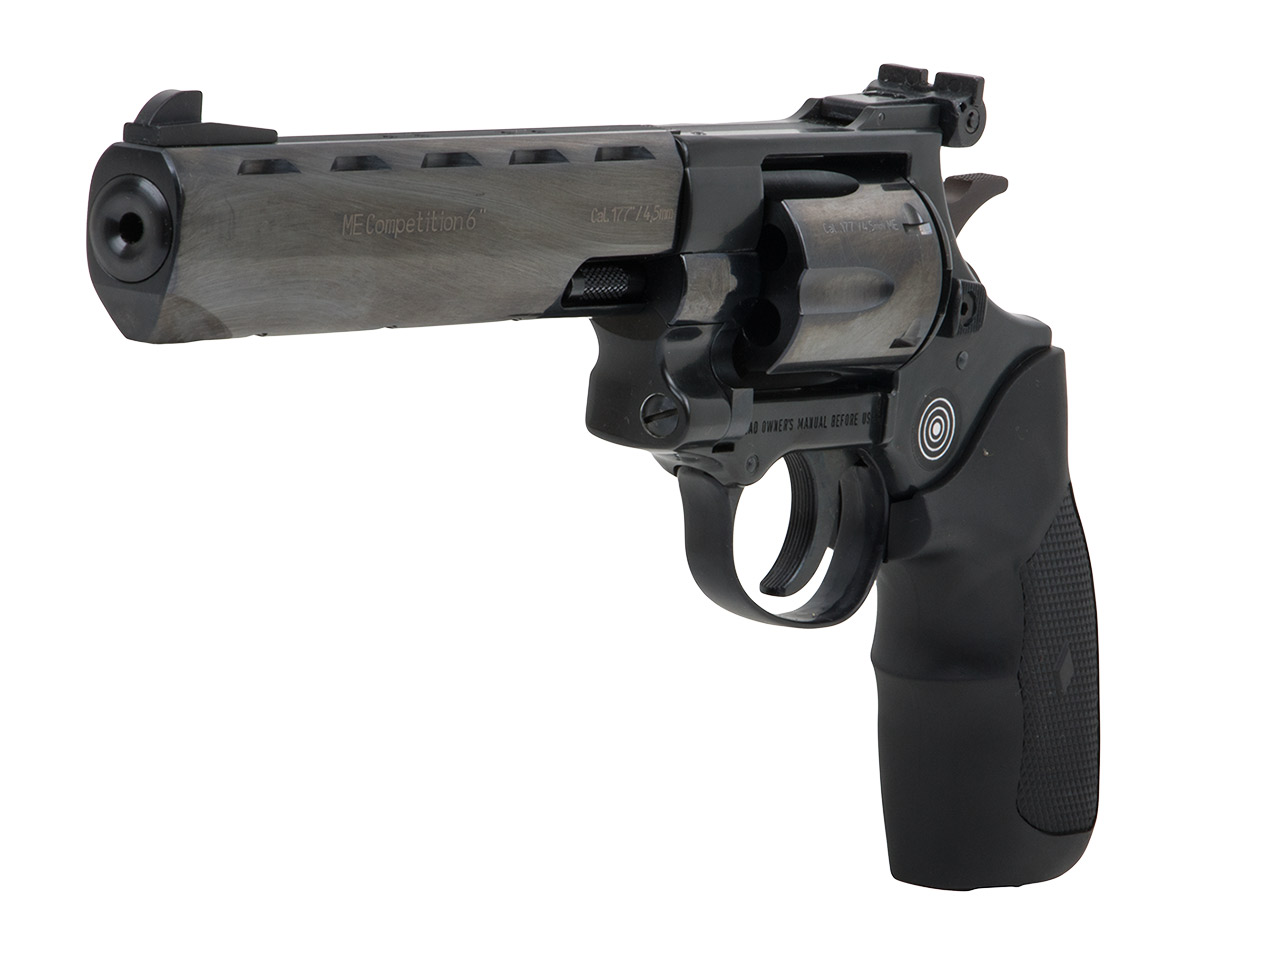 LEP Druckluft Revolver ME Competition 6 Zoll Stahllaufmantel brüniert Gummigriff Kaliber 4,5 mm (P18)